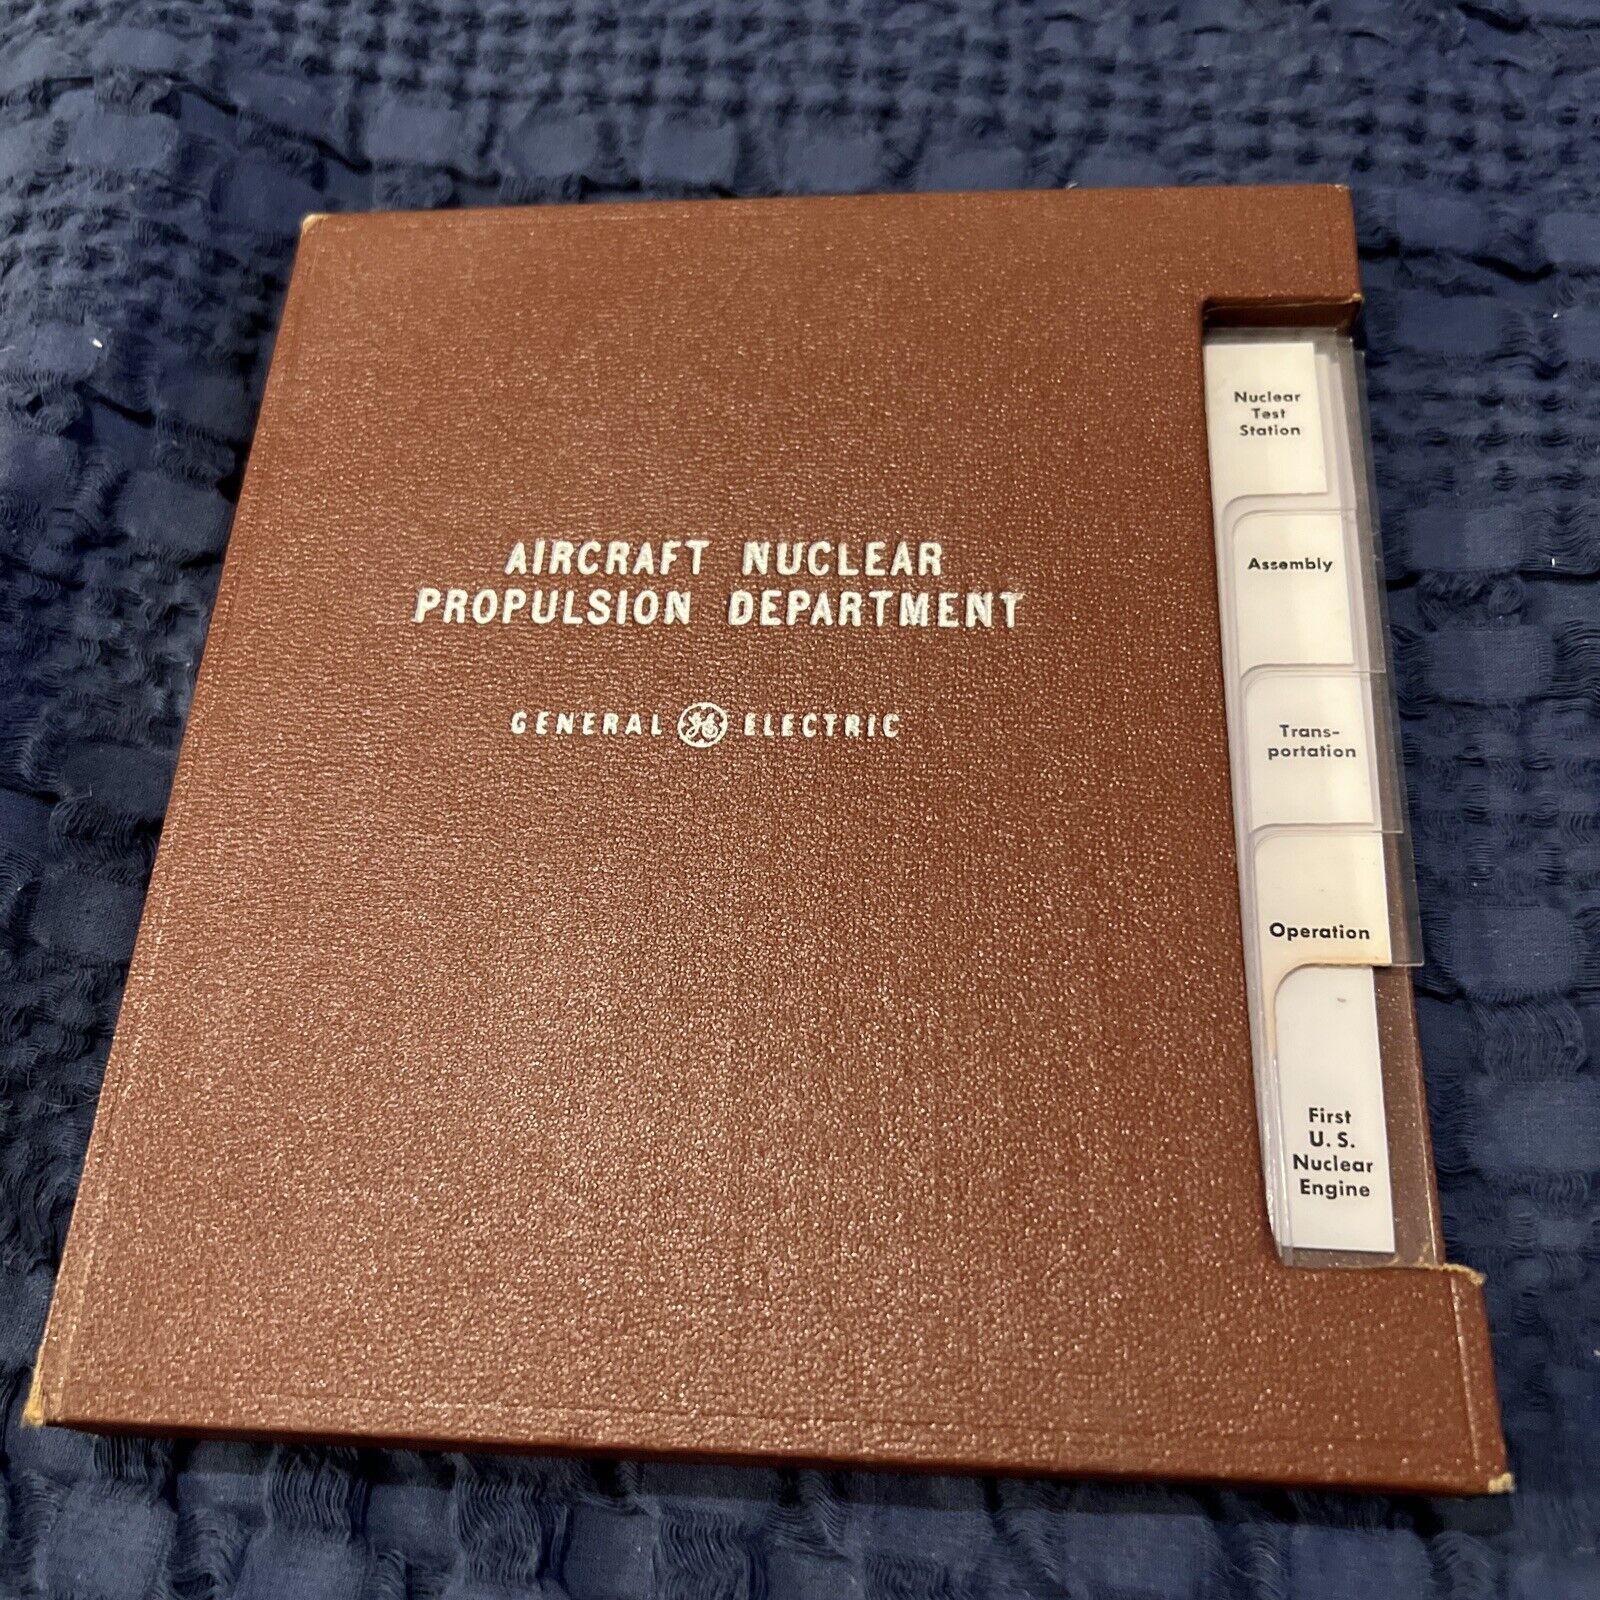 Publicity Case - General Electric Aircraft Nuclear Propulsion Department J87 X39